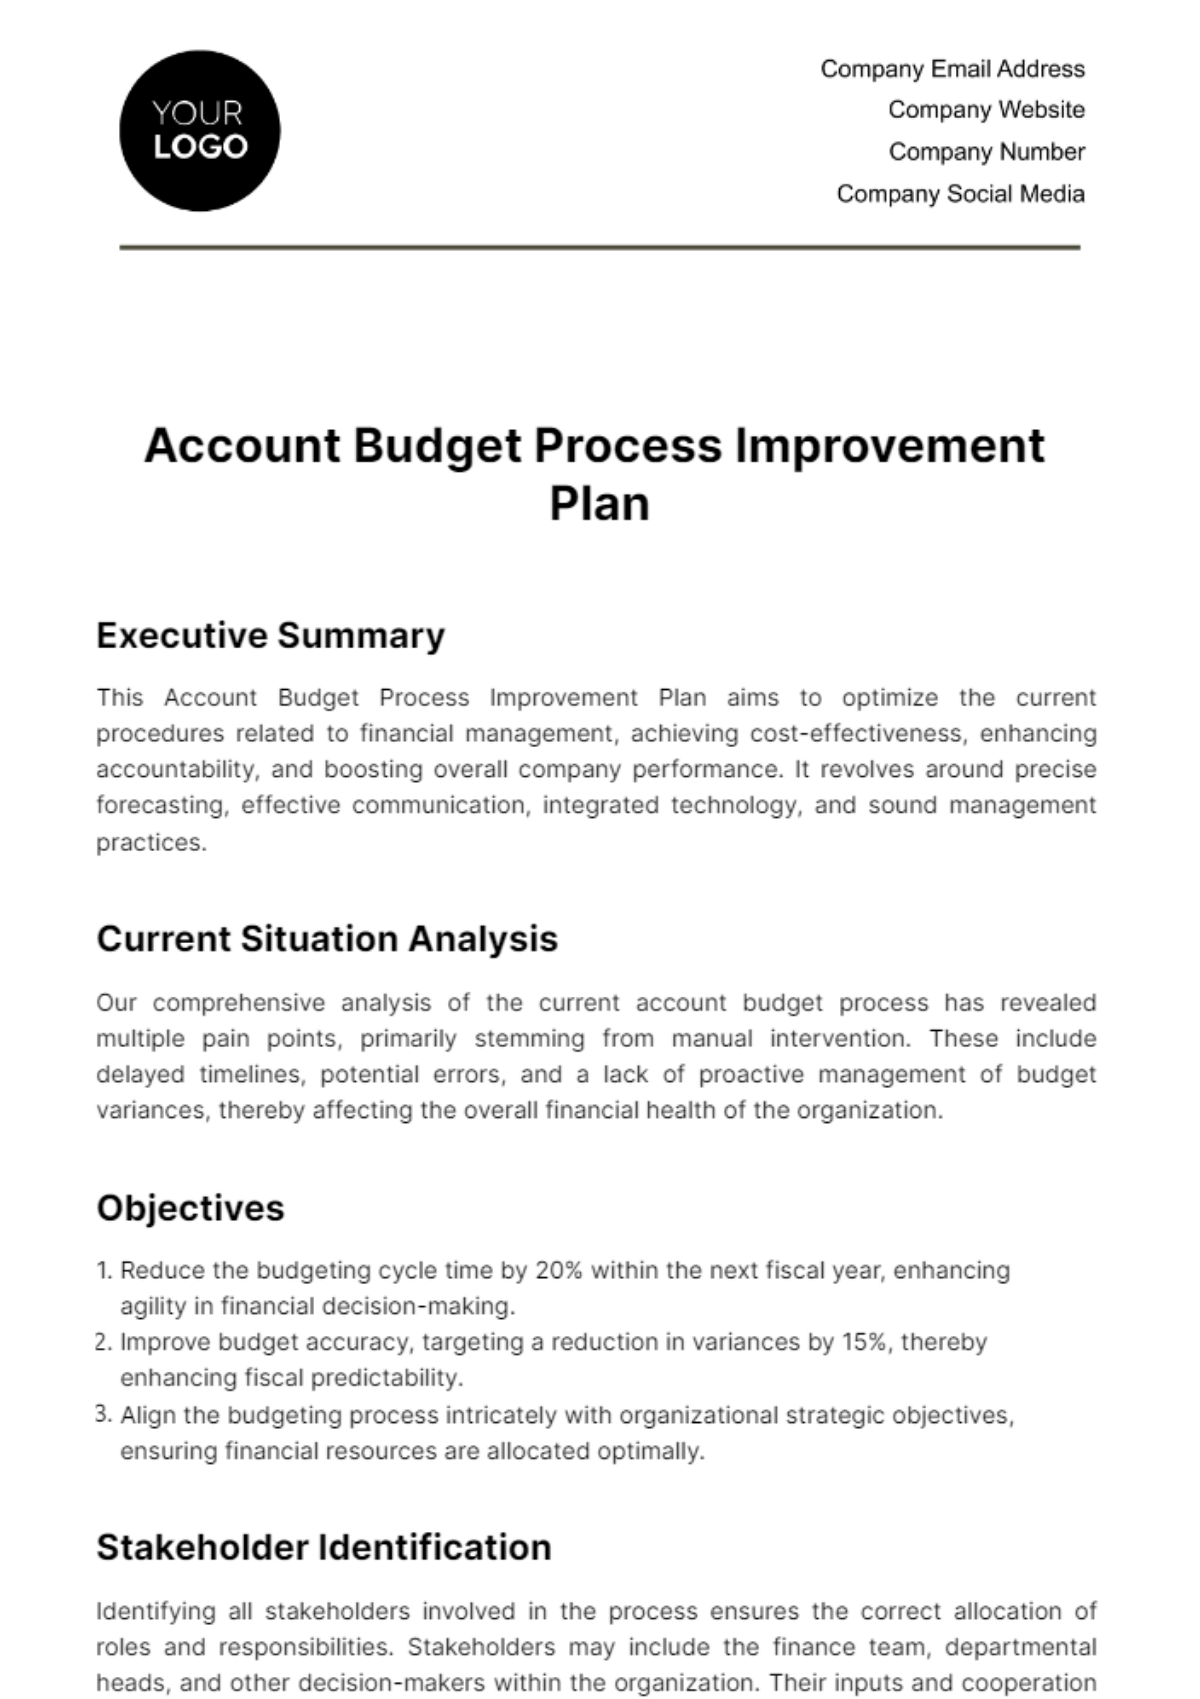 Account Budget Process Improvement Plan Template